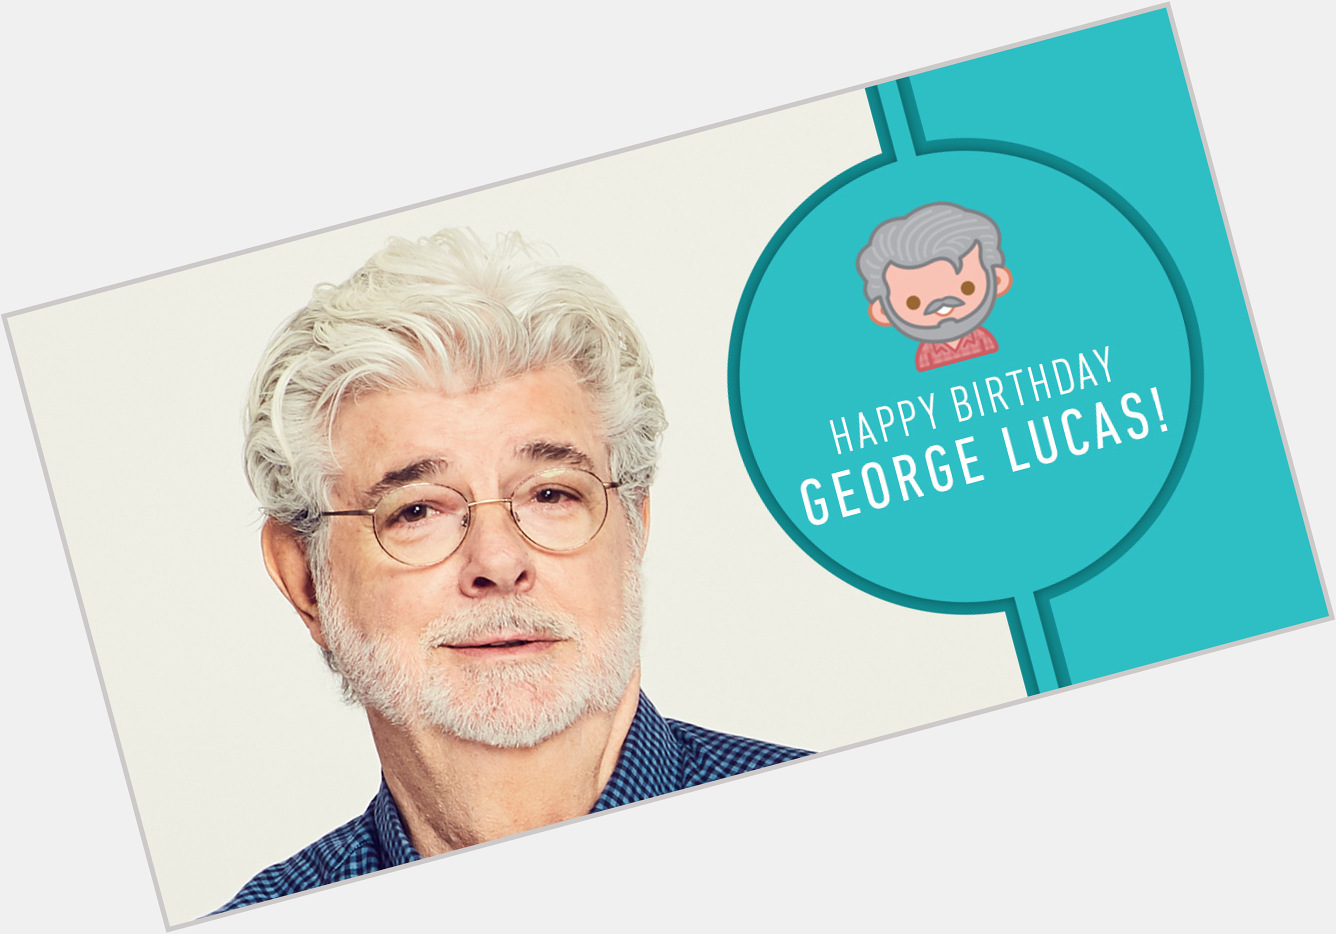 Happy birthday to George Lucas ! 